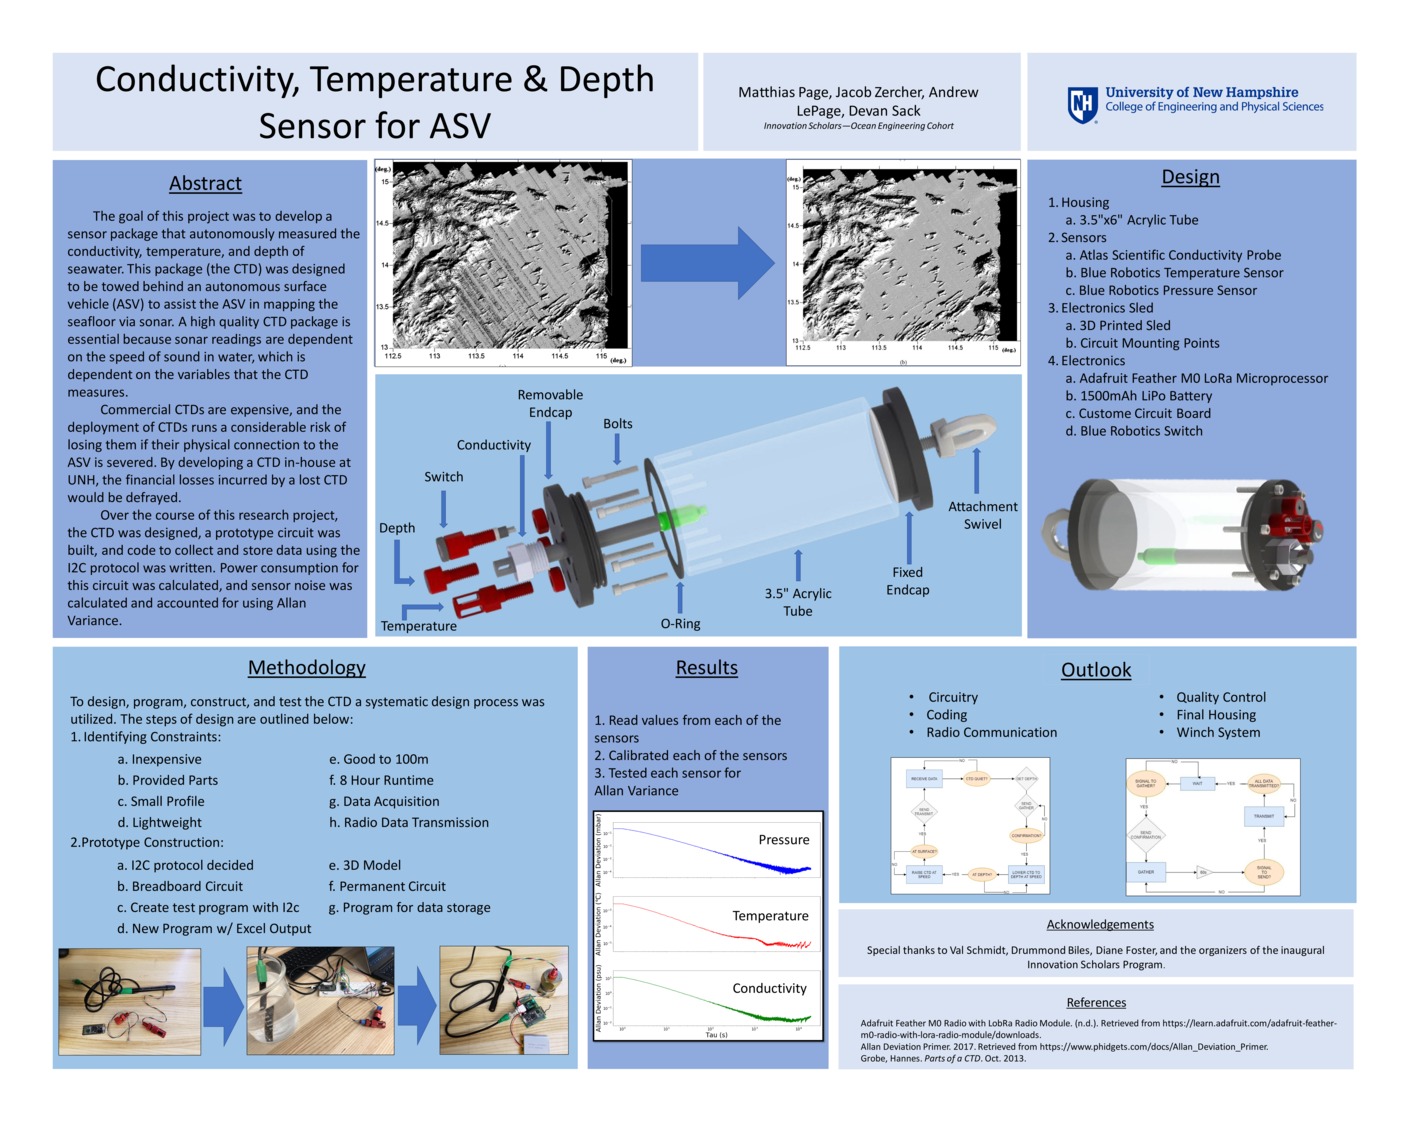 Conductivity, Temperature & Depth Sensor For Asv by jz1075